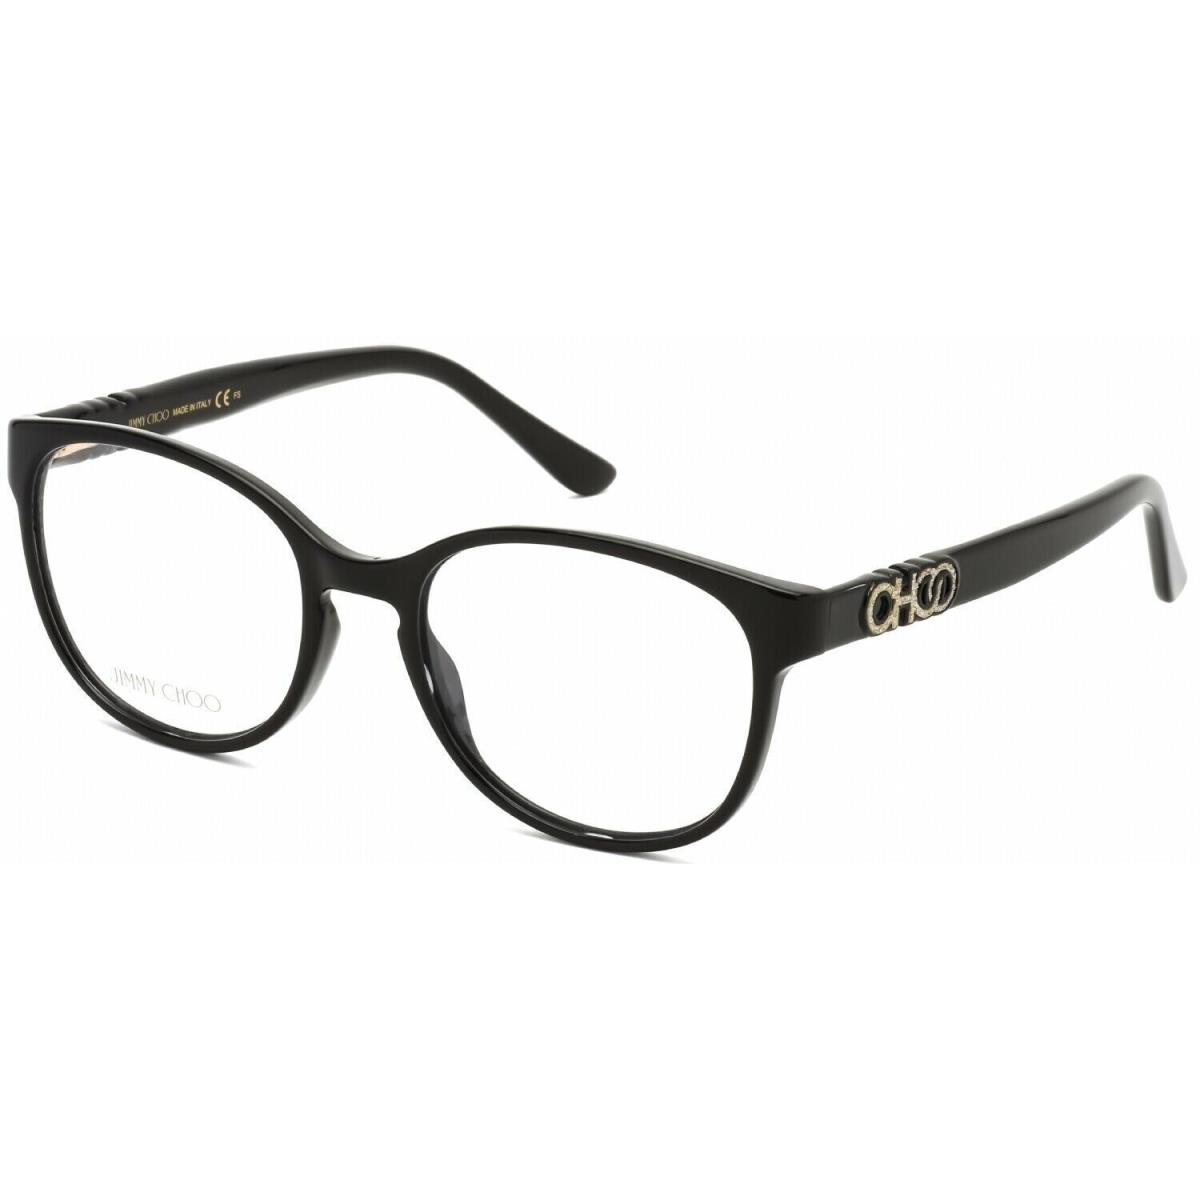 Jimmy Choo Eyeglasses Full Rim JC240 807 Black Frame 52MM Rx-able